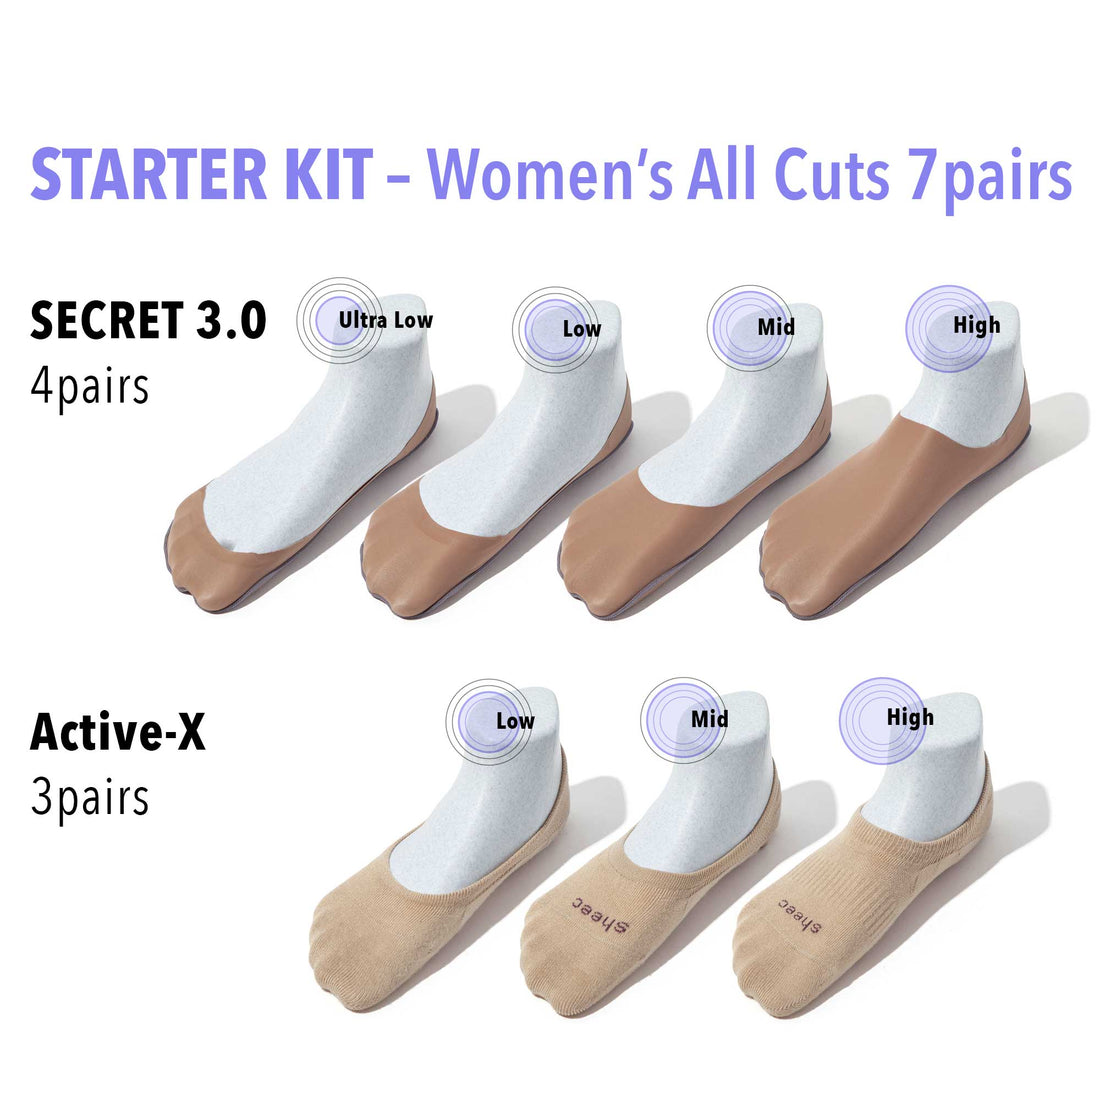 Hidden Socks for Women Variety Pack | 7 Pairs Tan & Beige